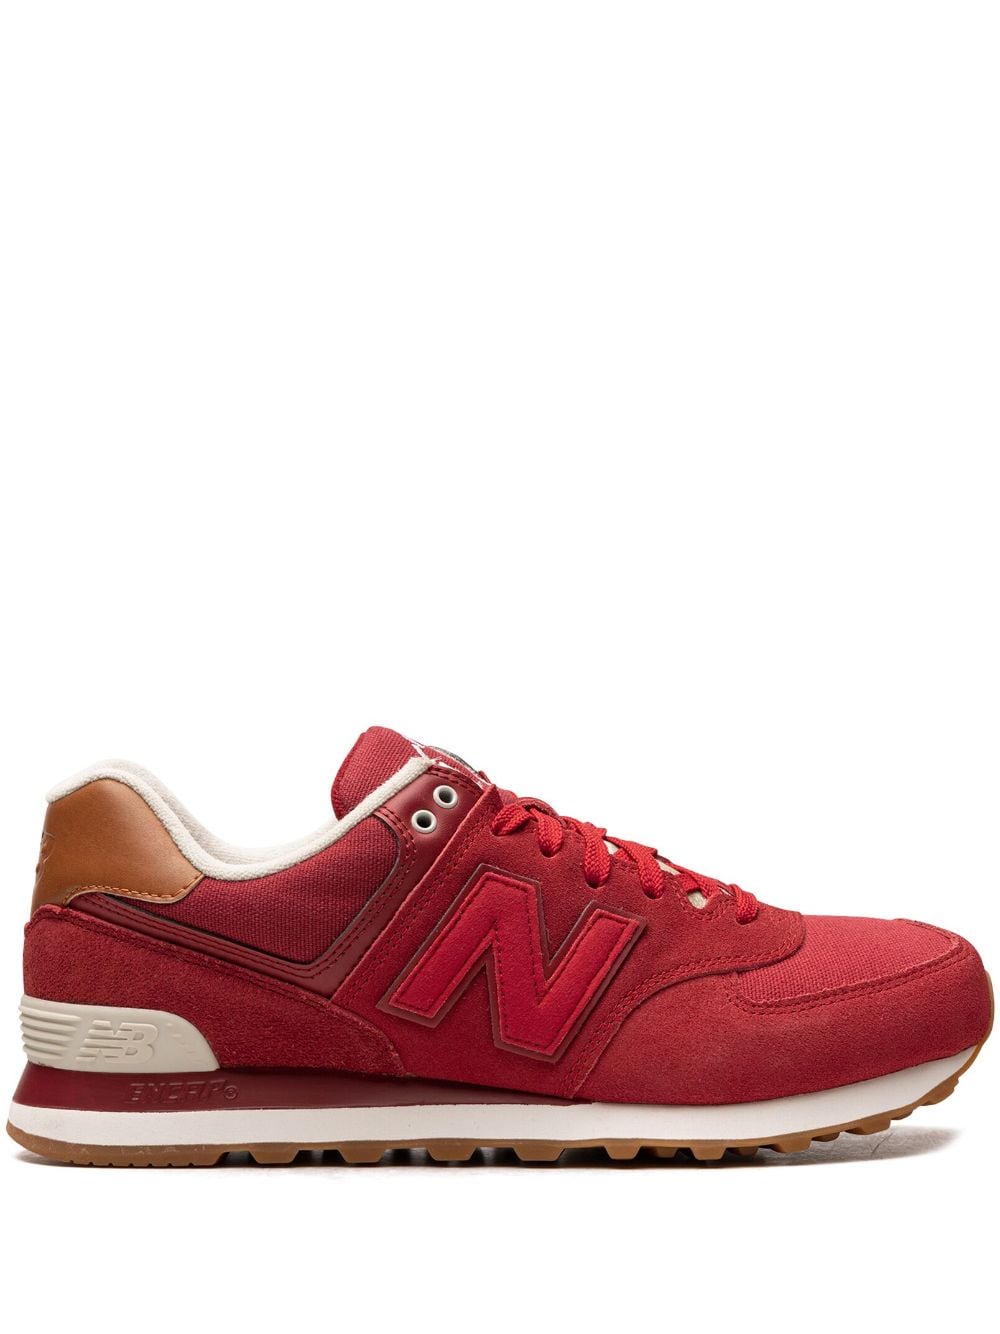 New Balance 574 "Crimson Red" sneakers